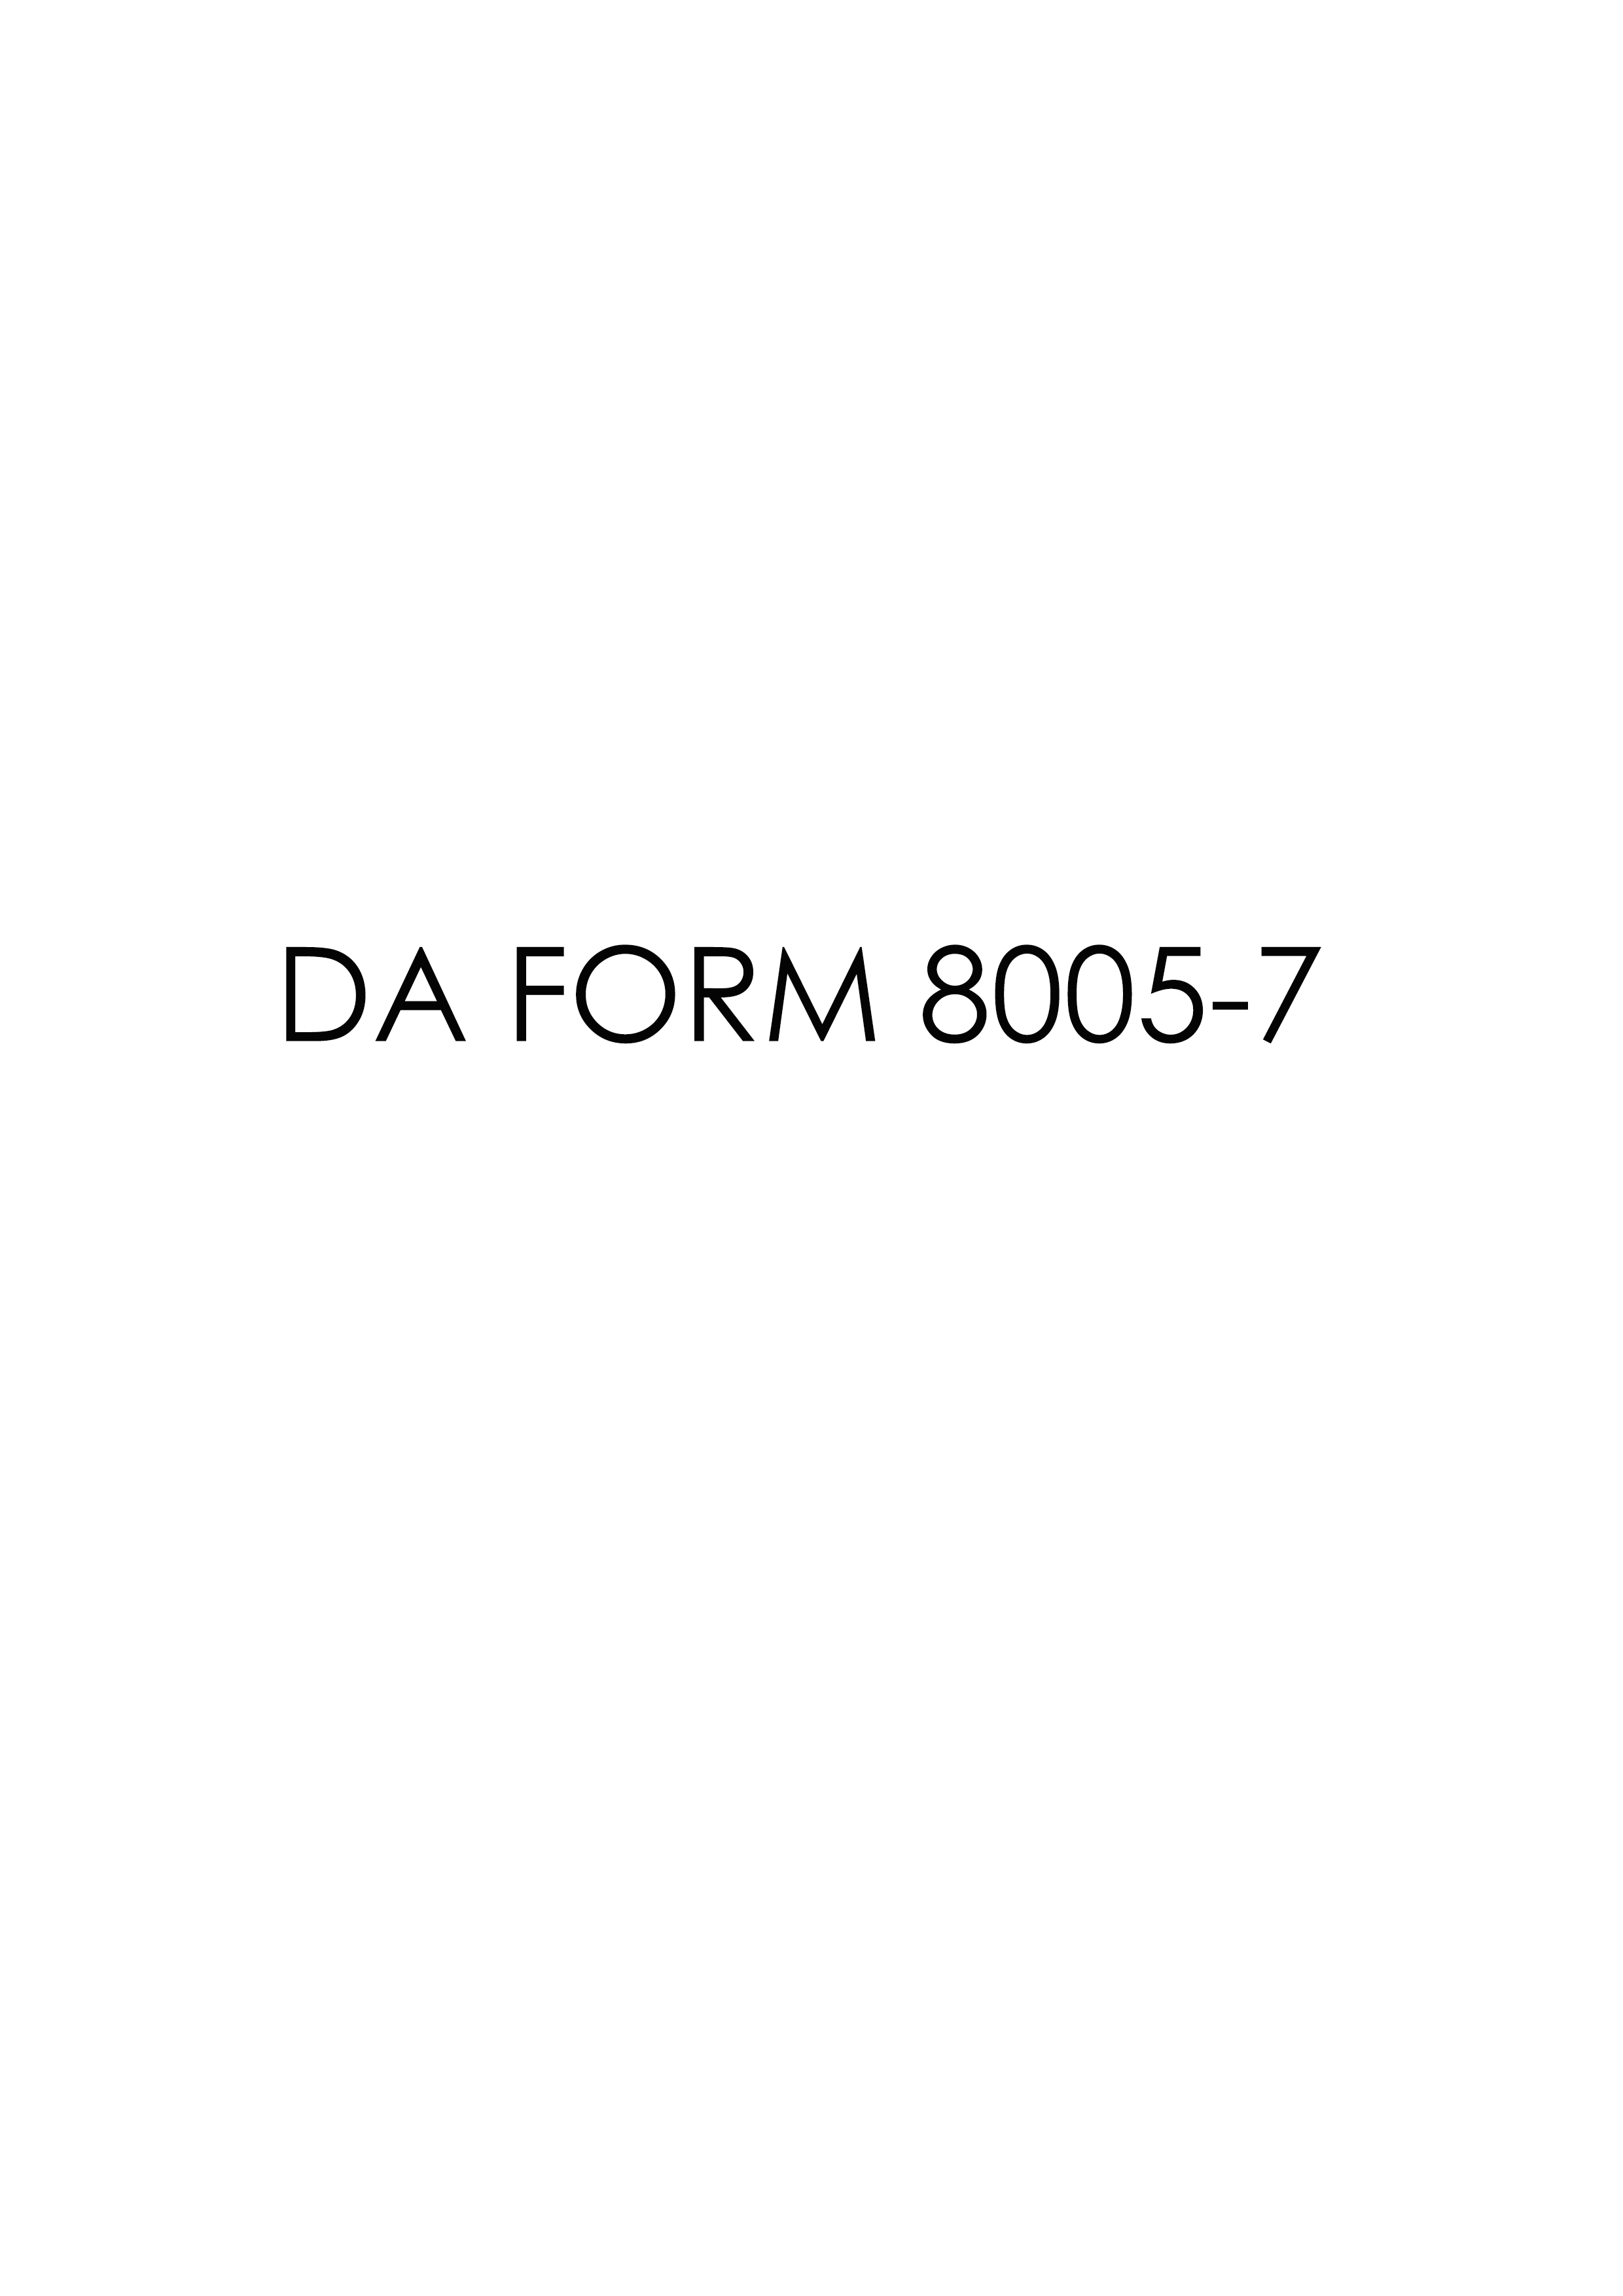 Download da 8005-7 Form